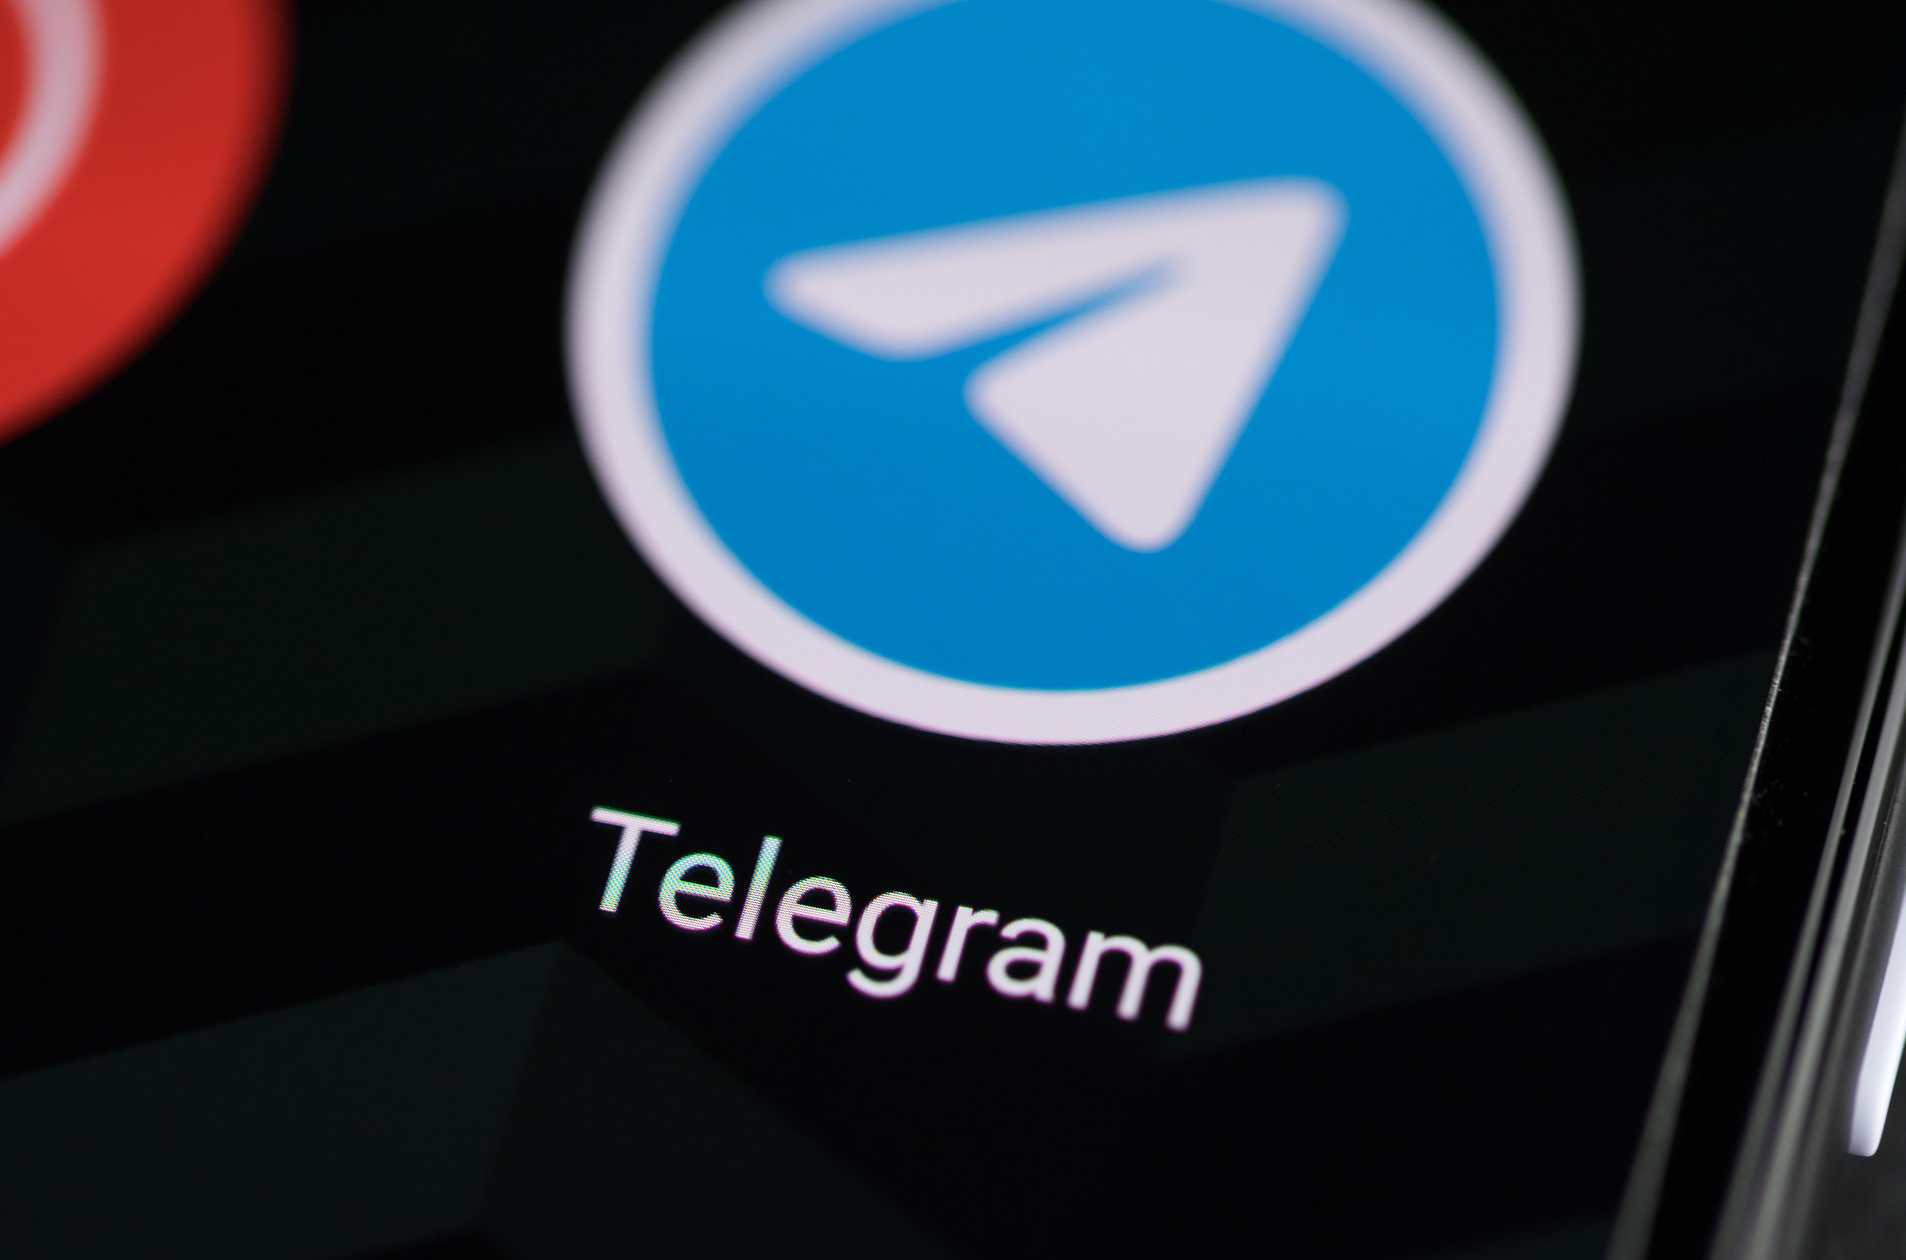 Telegram.